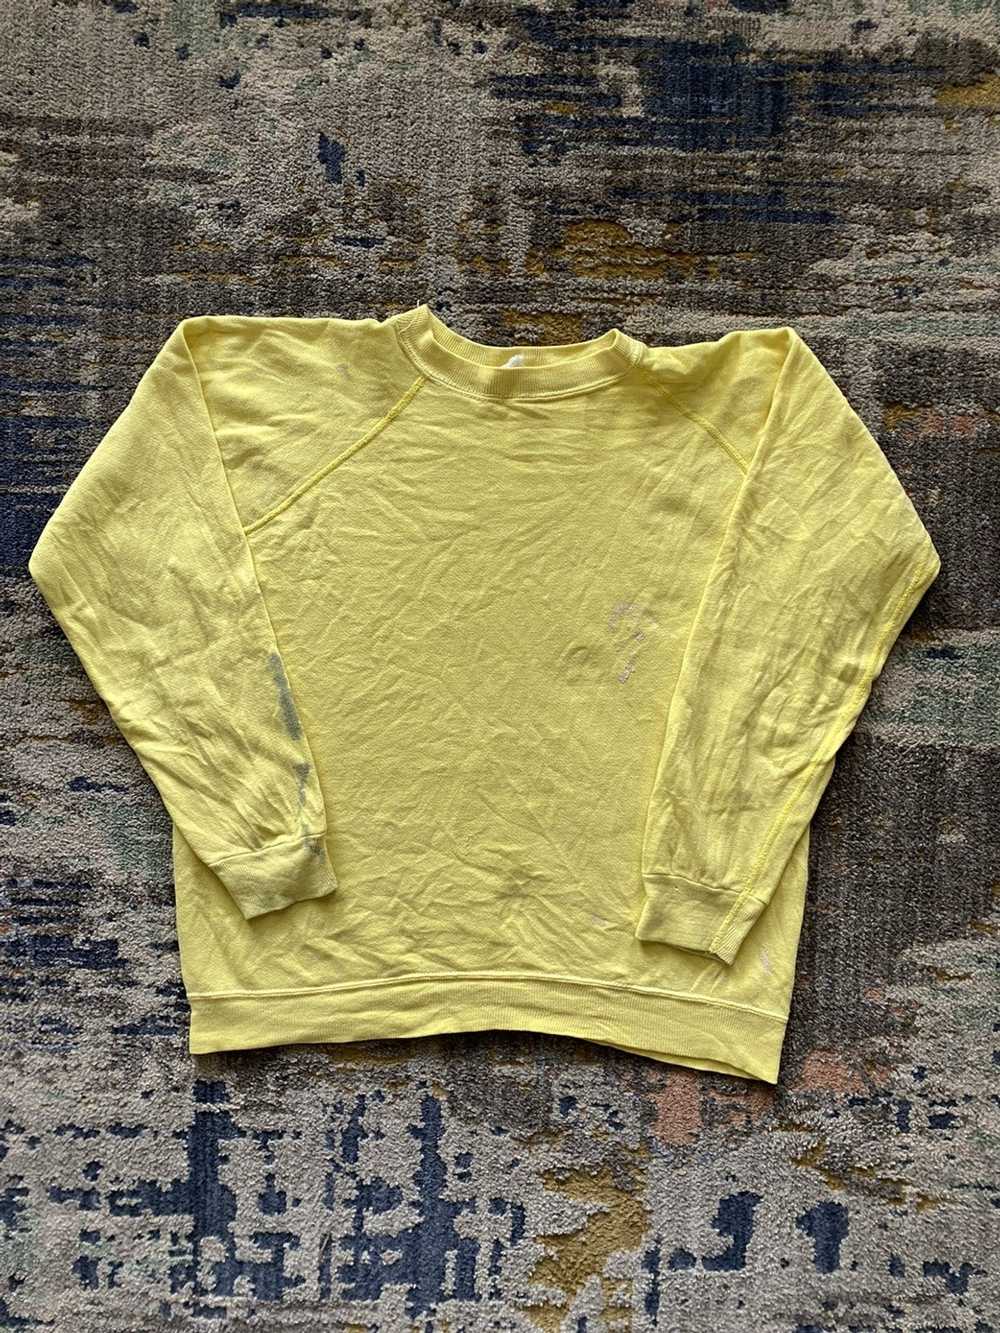 Vintage 1960’s painters yellow sweatshirt - image 1